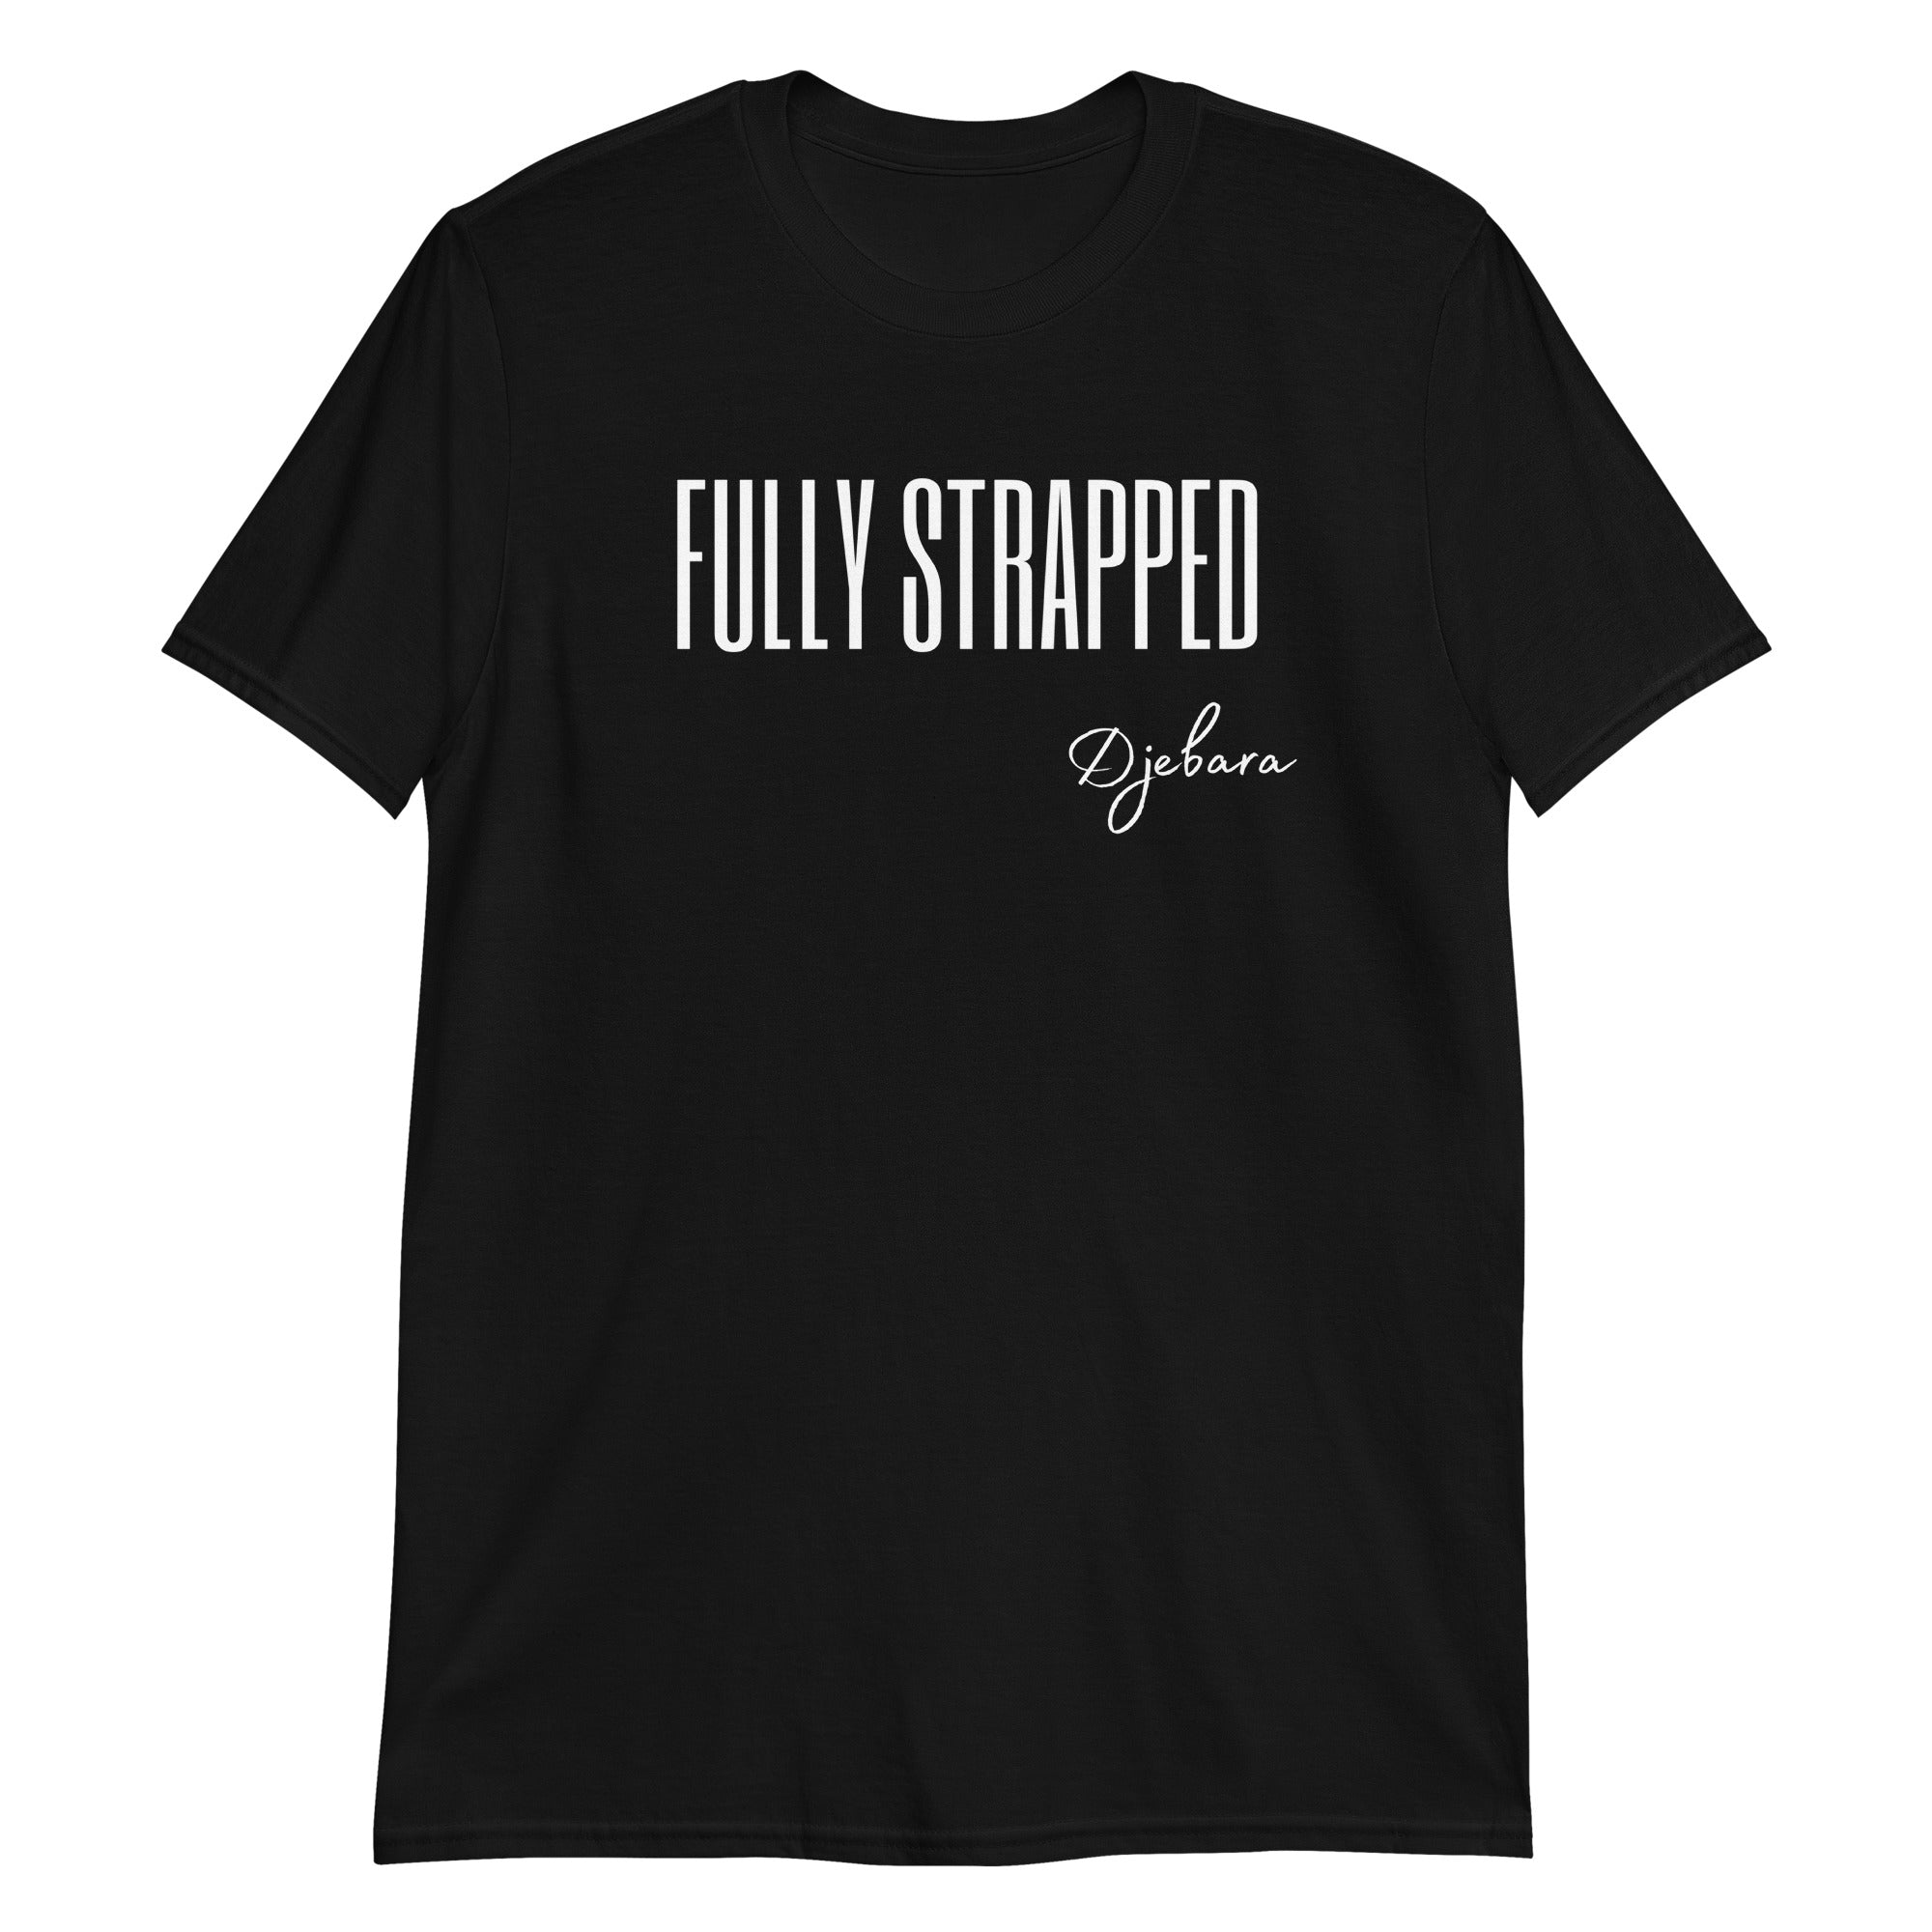 Black FULLY STRAPPED Short-Sleeve Gildan Unisex T-Shirt S-3XL